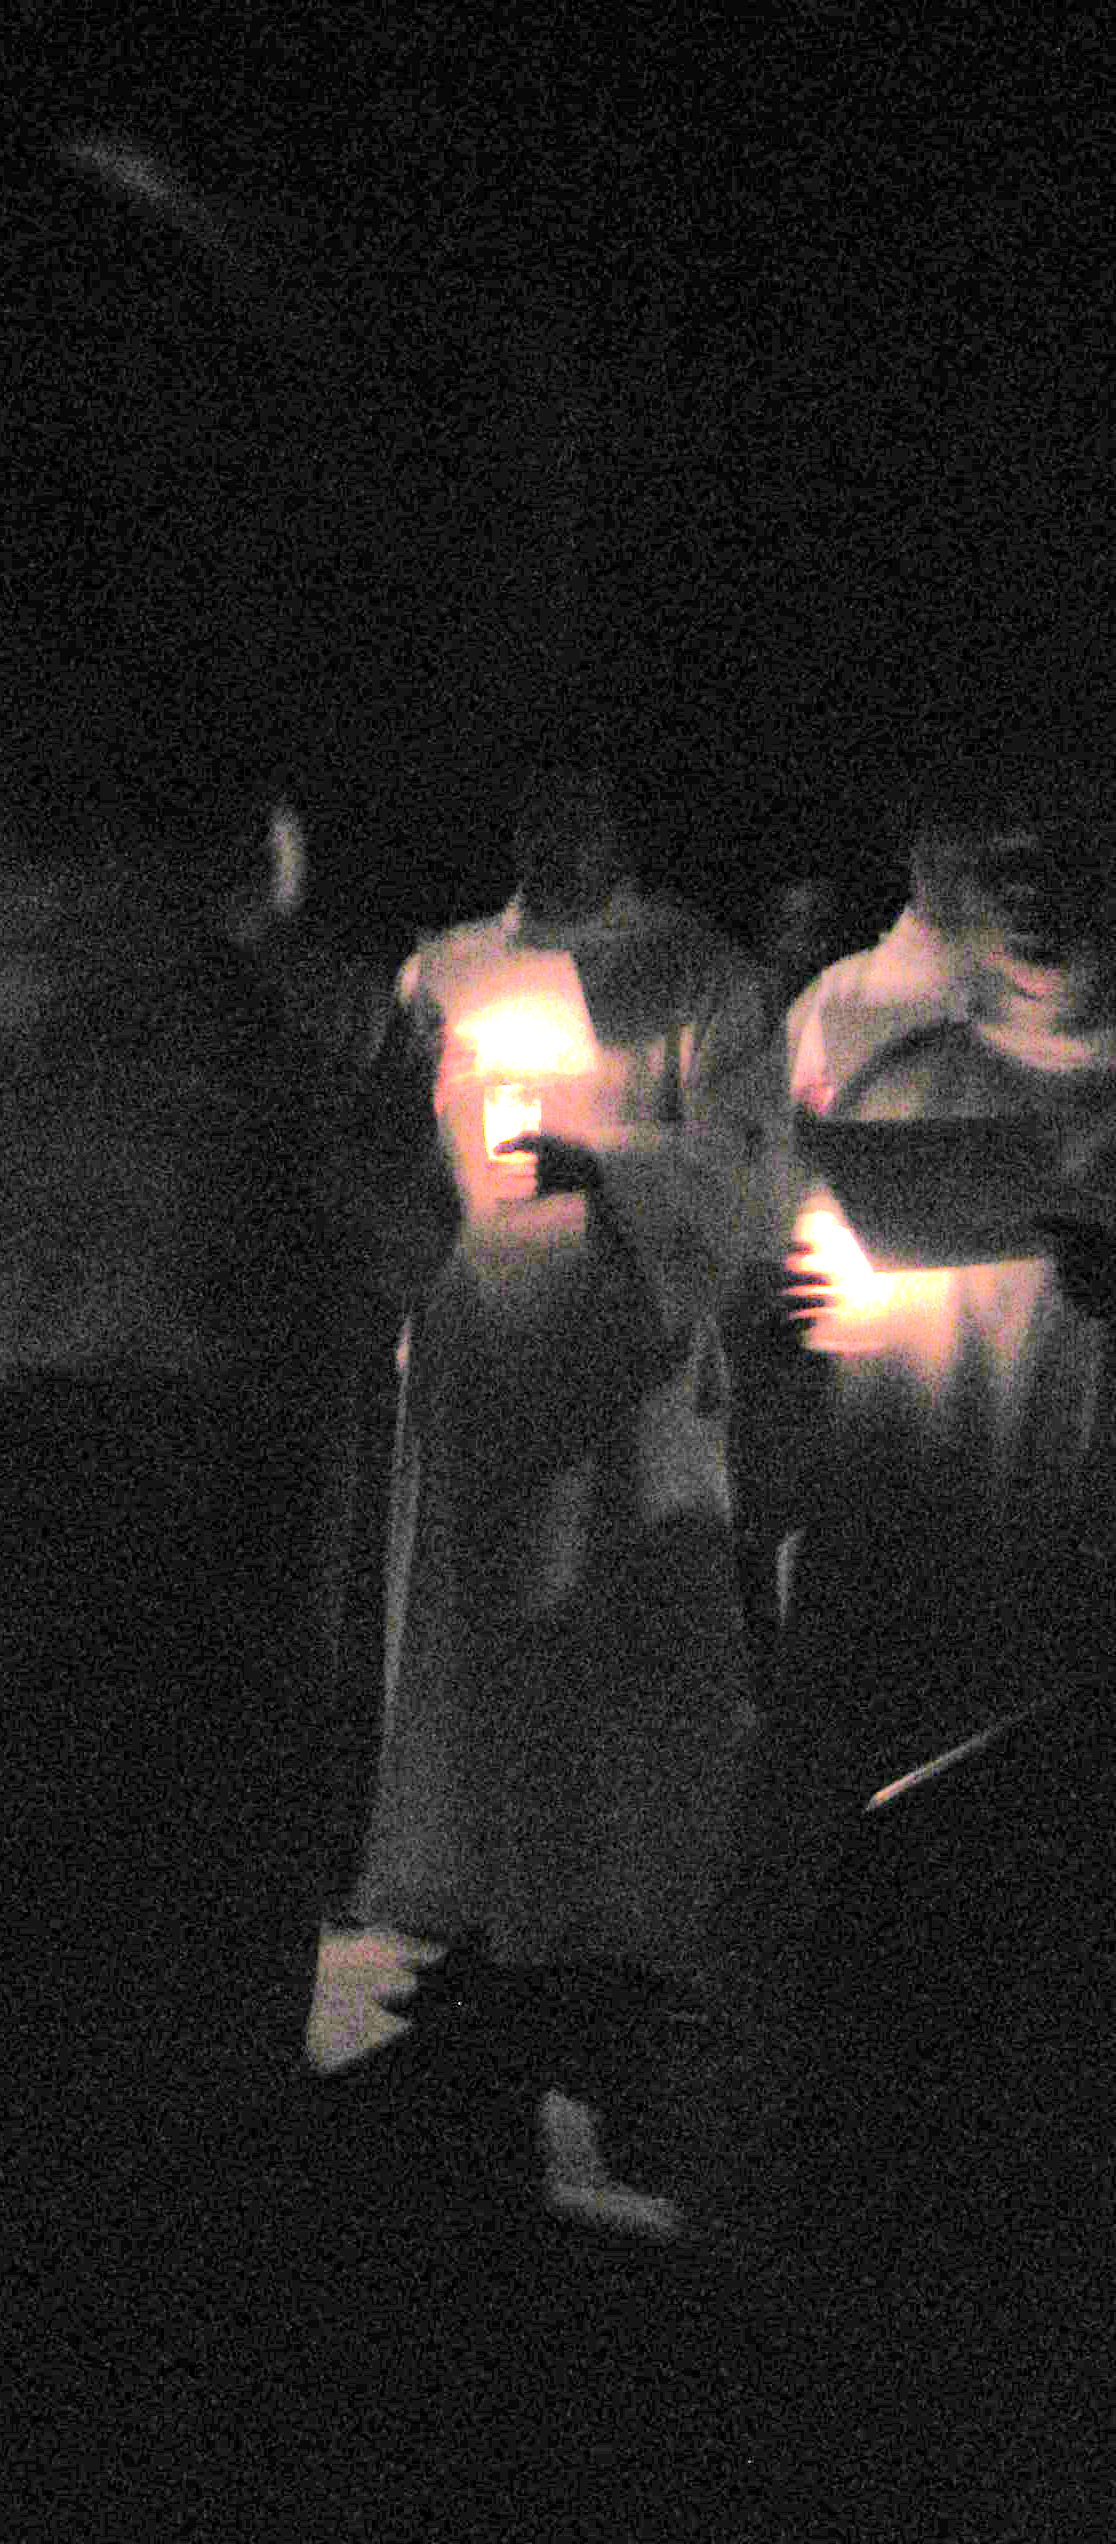 people in motion walking through an open dark space